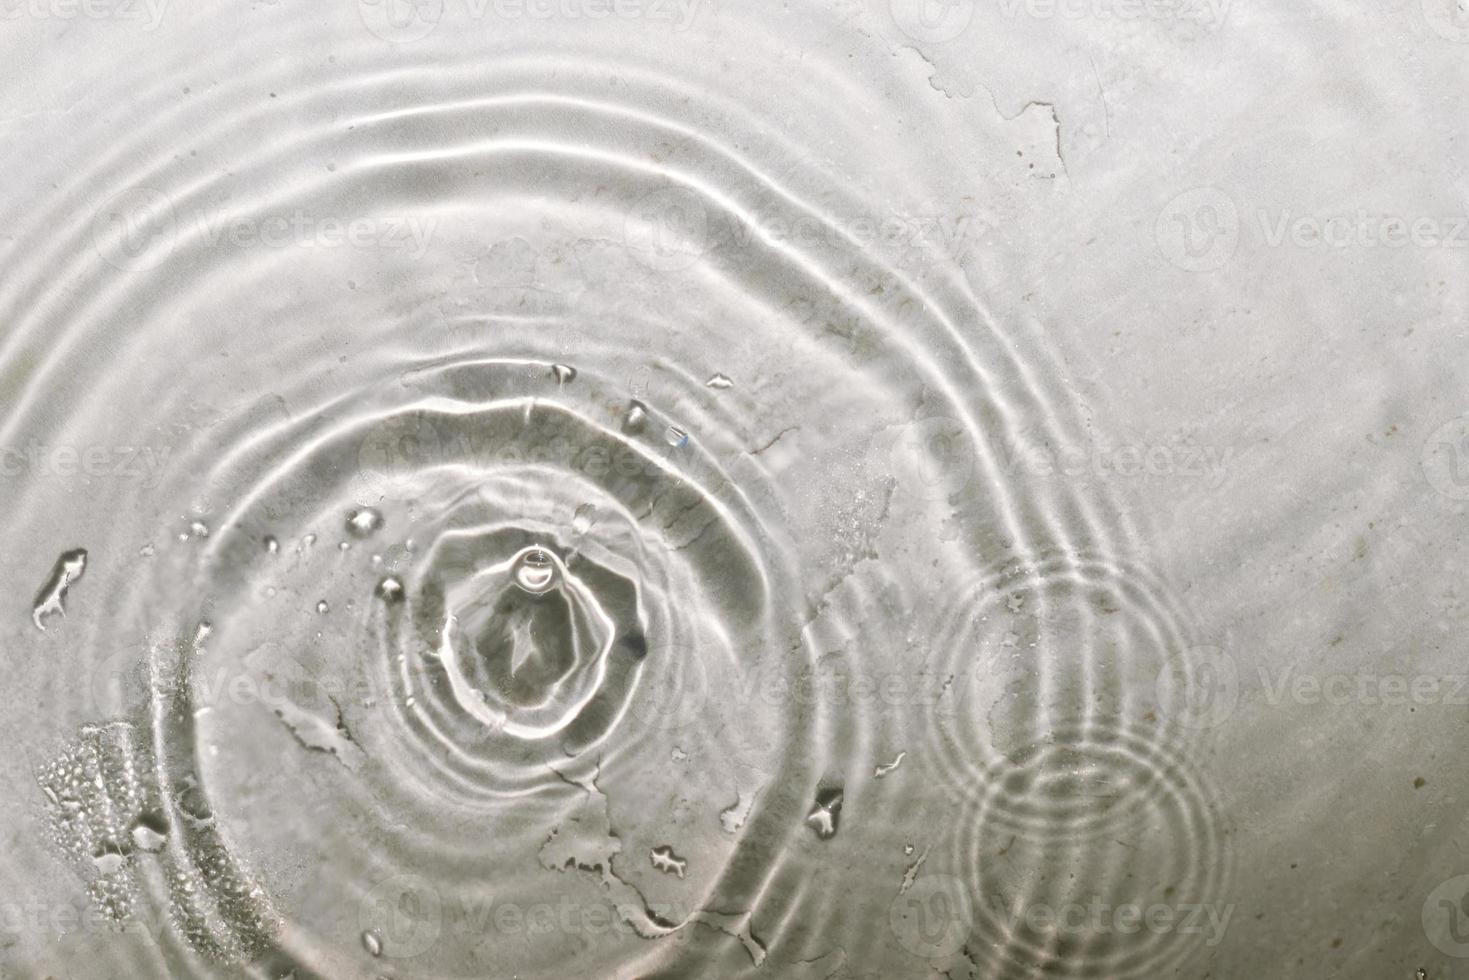 Water splash of falling drop with circular waves photo